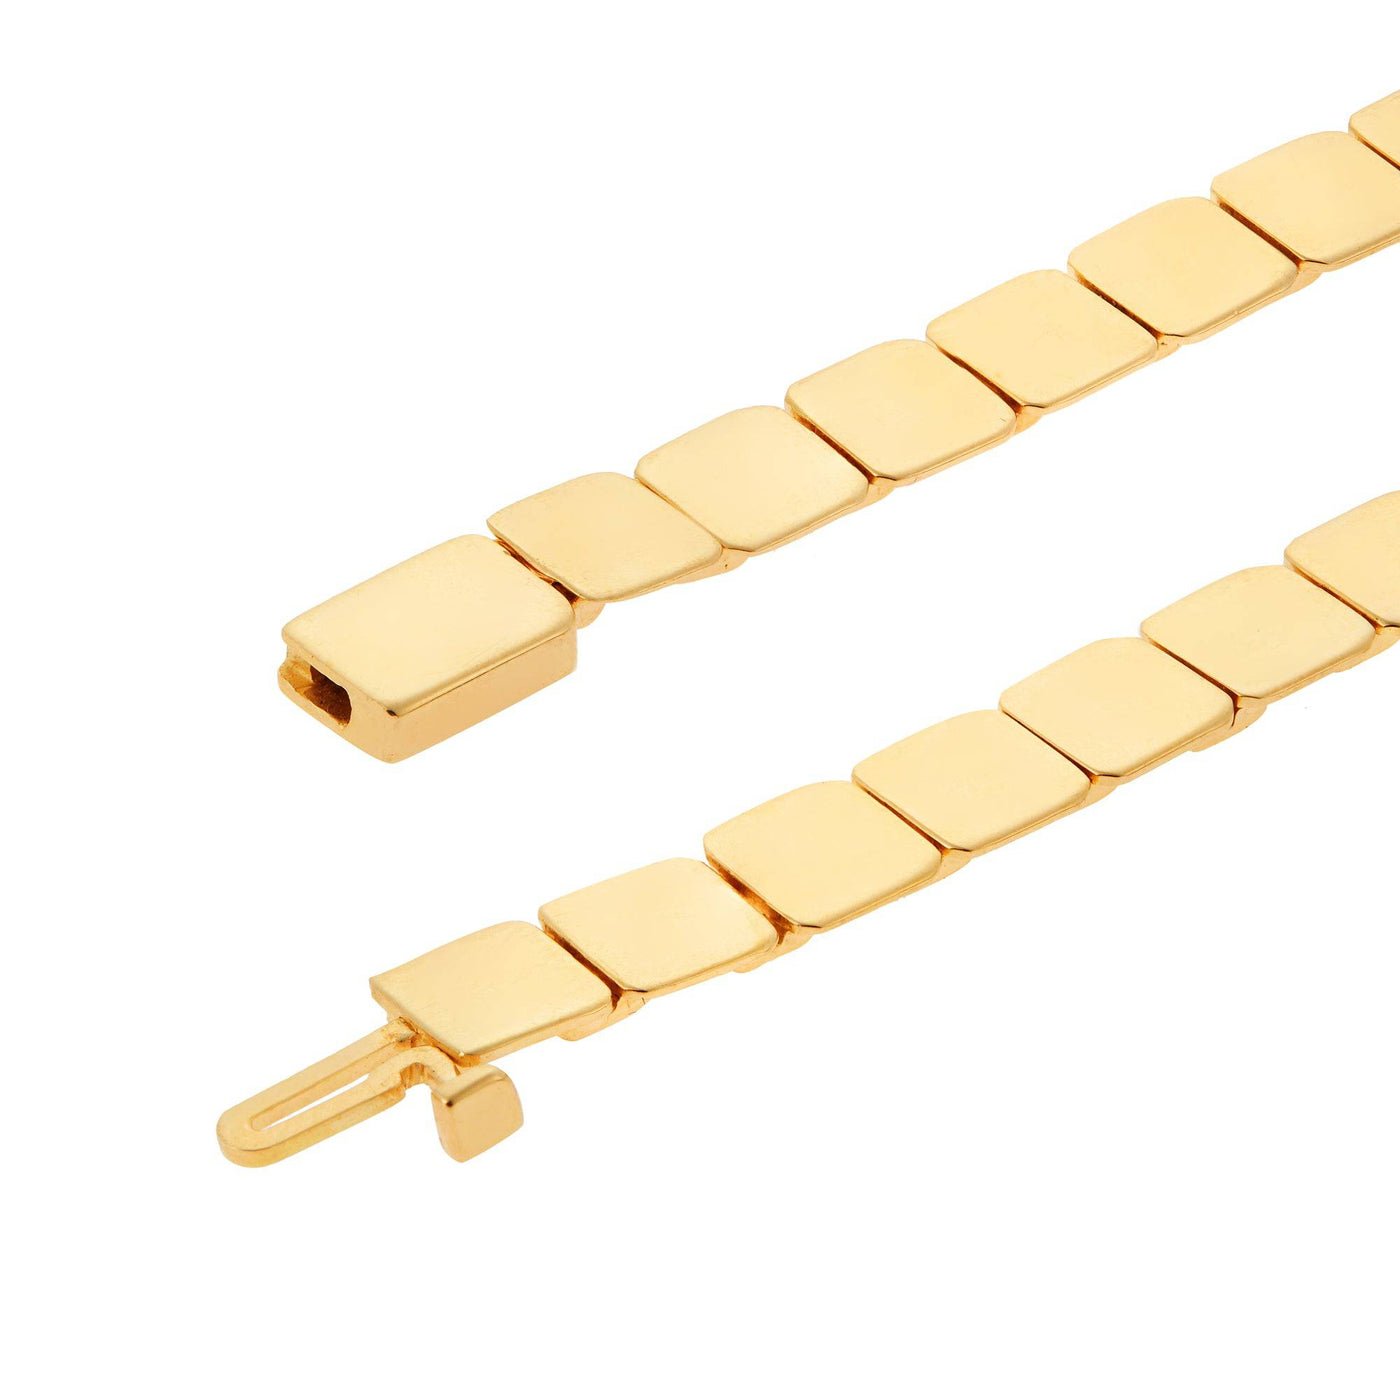 Medium Tile Single Bracelet - Tile - Ileana Makri store